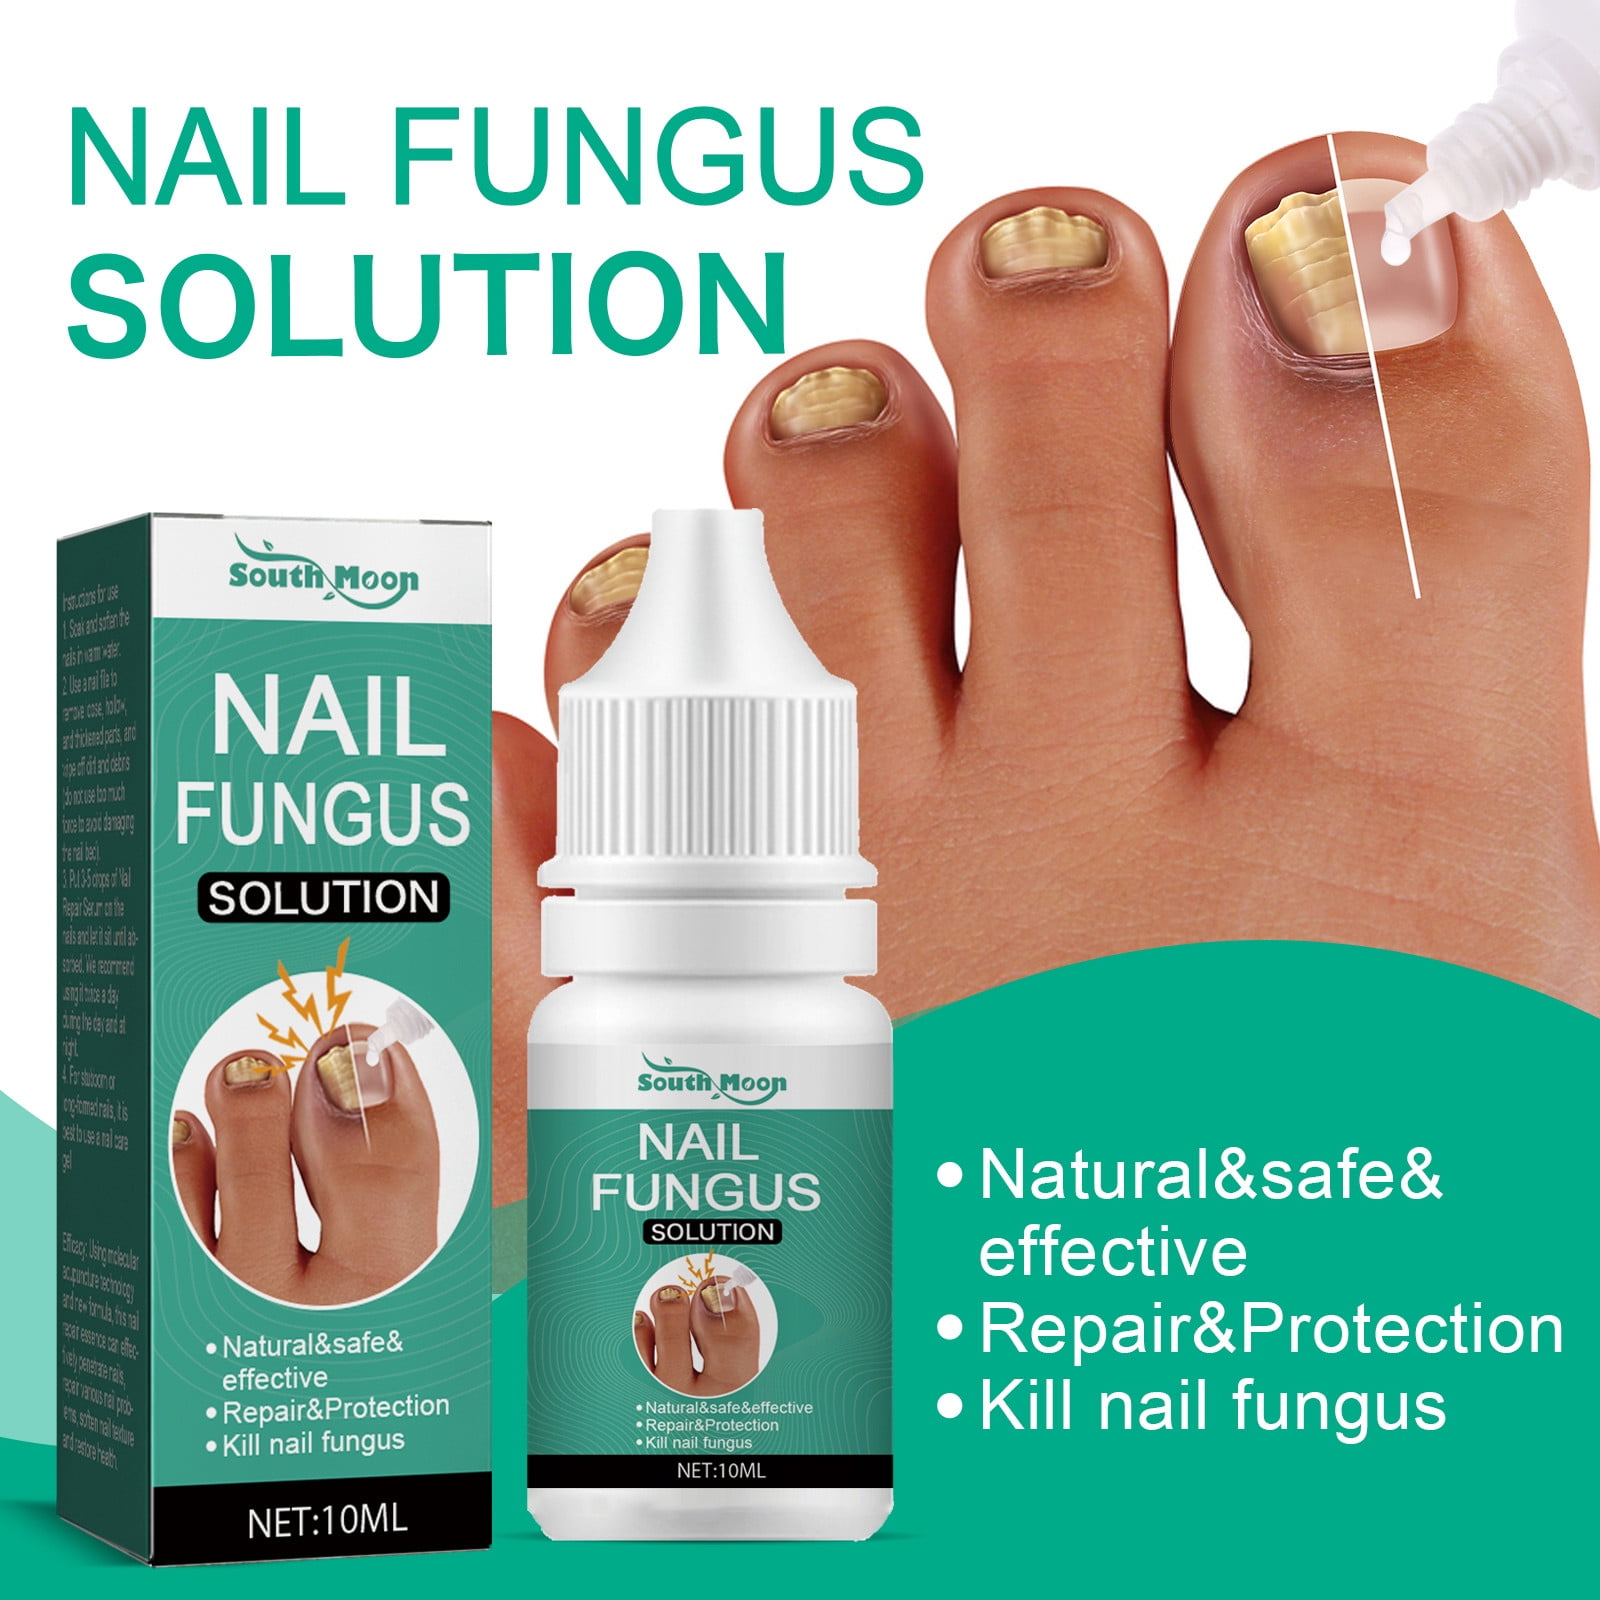 Black Fingernail - Symptoms, Causes & Treatment